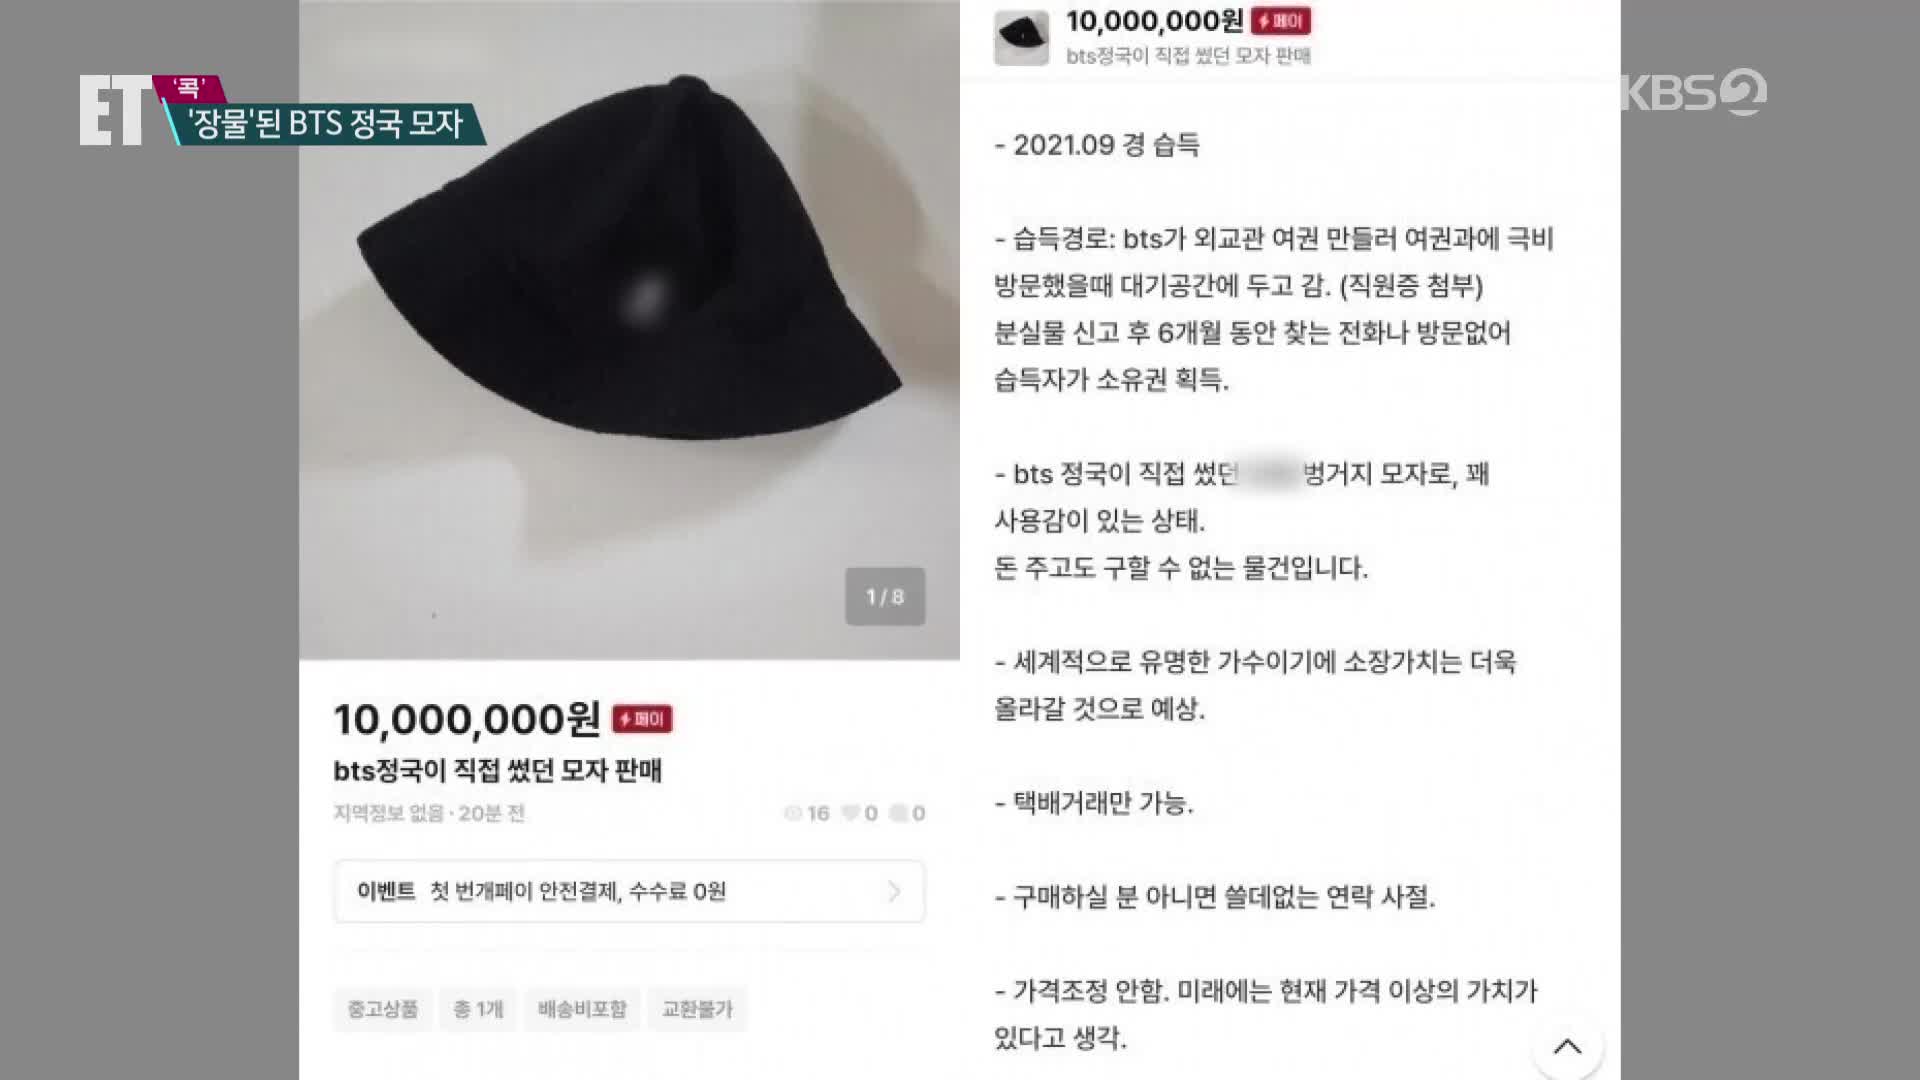 [ET] “BTS 정국이 썼던 모자 팝니다”…중고마켓에선 산 물건이 장물이라고?!